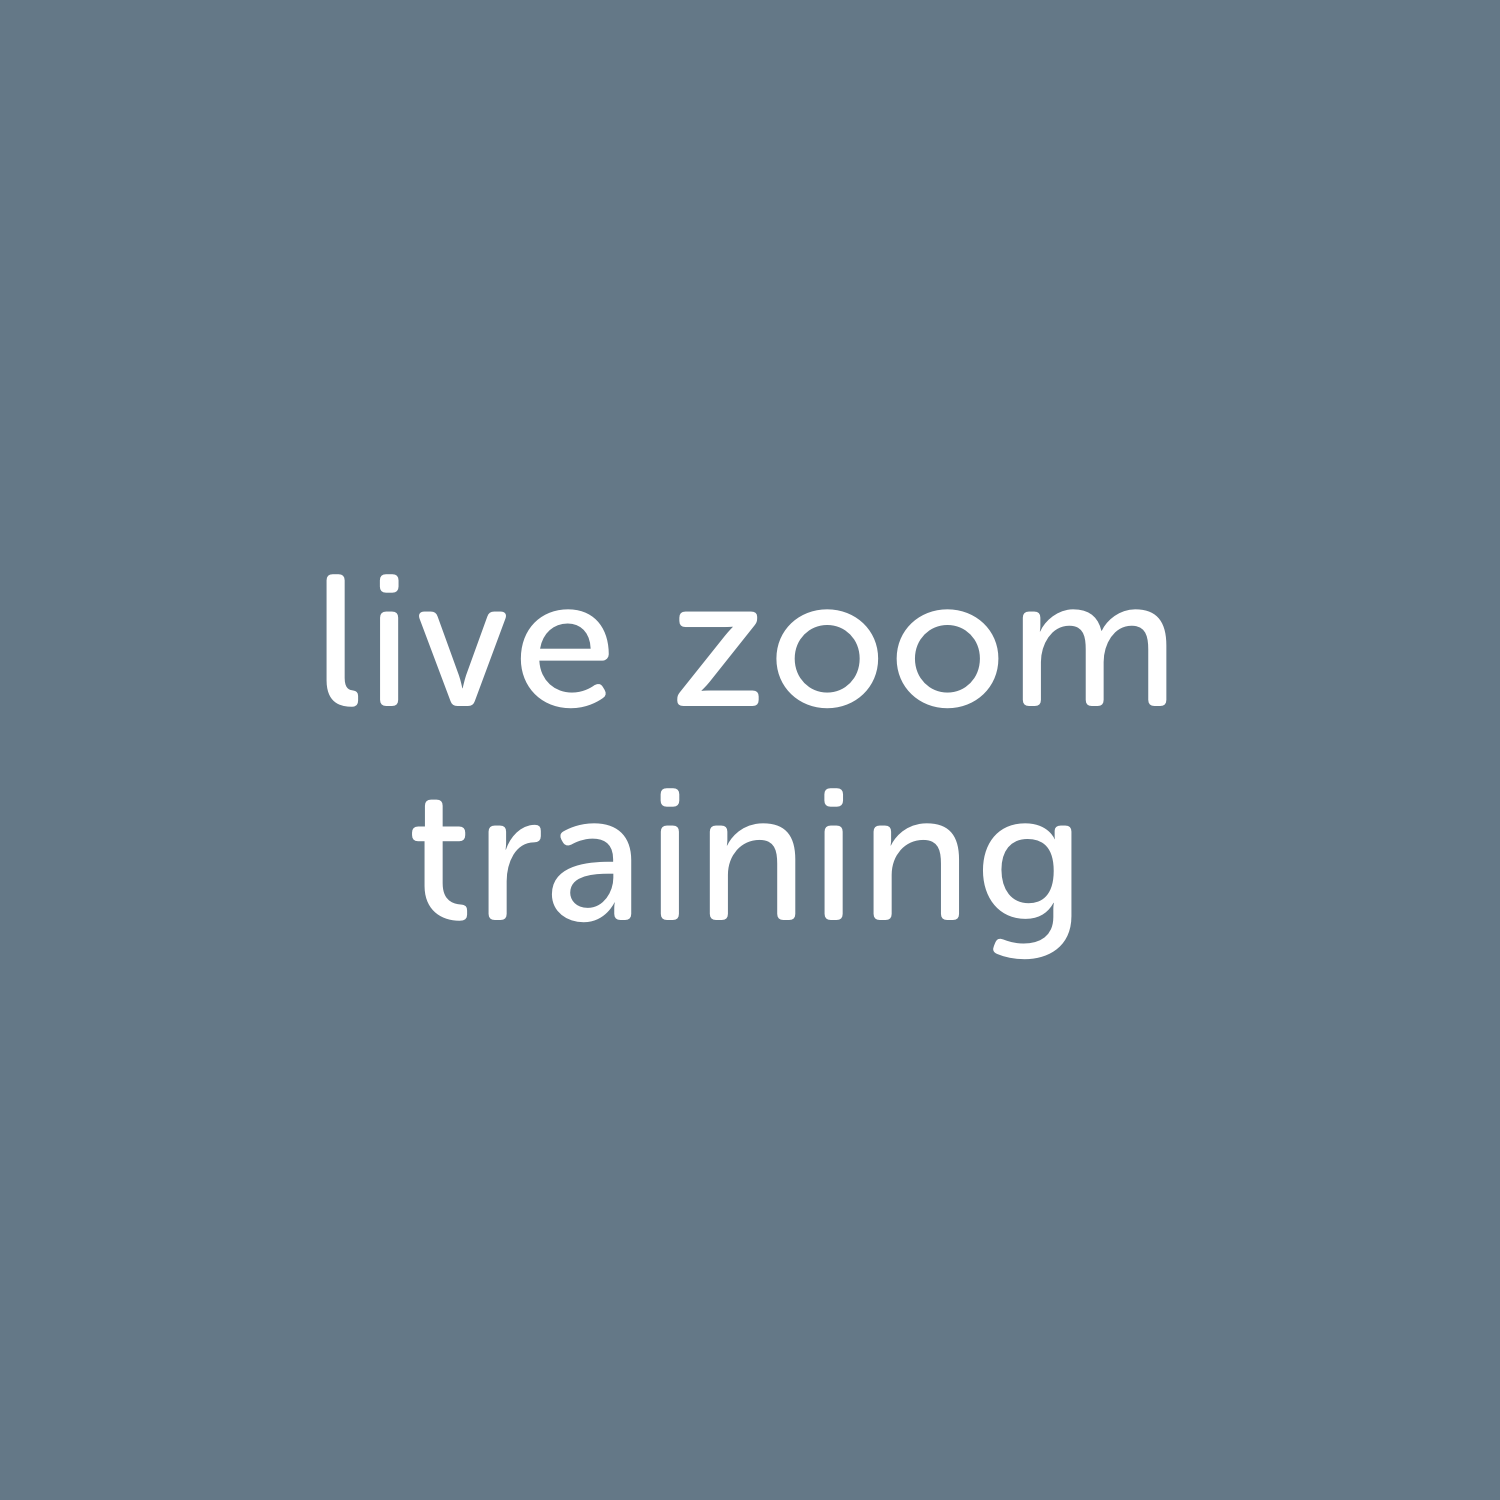 Live Zoom training